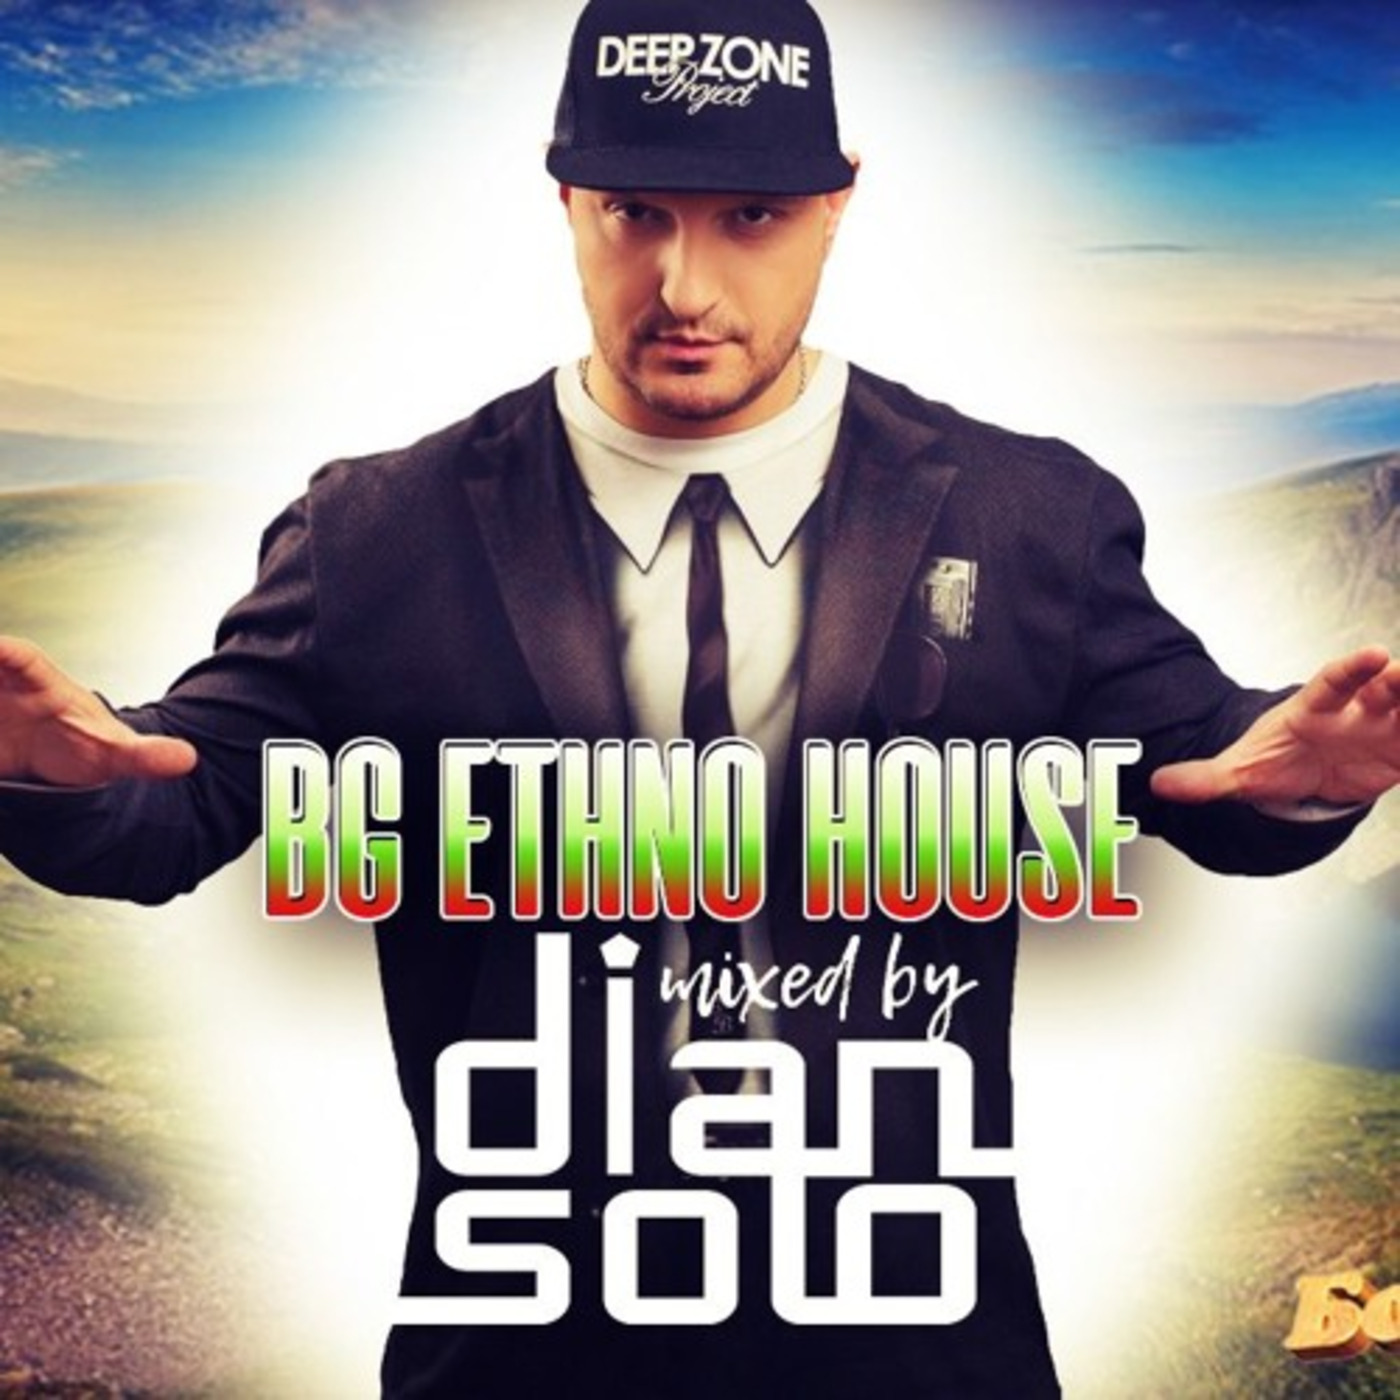 BG Ethno House mixed by Dian Solo (с комплимент От Бор Чвор)